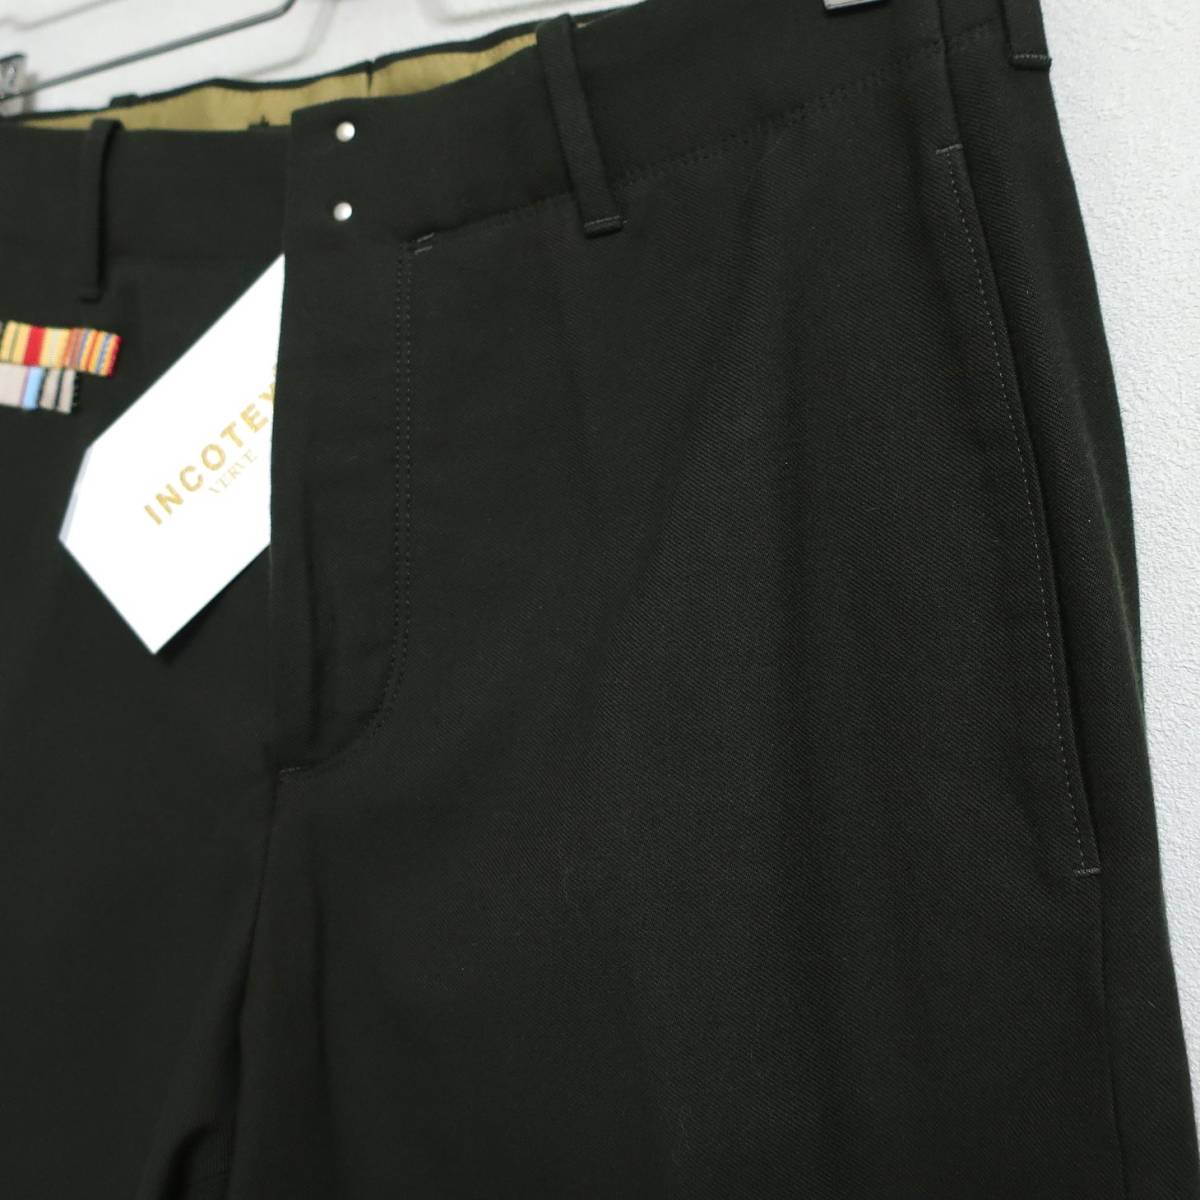  new goods INCOTEX INCOTEX wool . top class chinos slacks tapered pants slim pants deep green dark olive 46 M size 